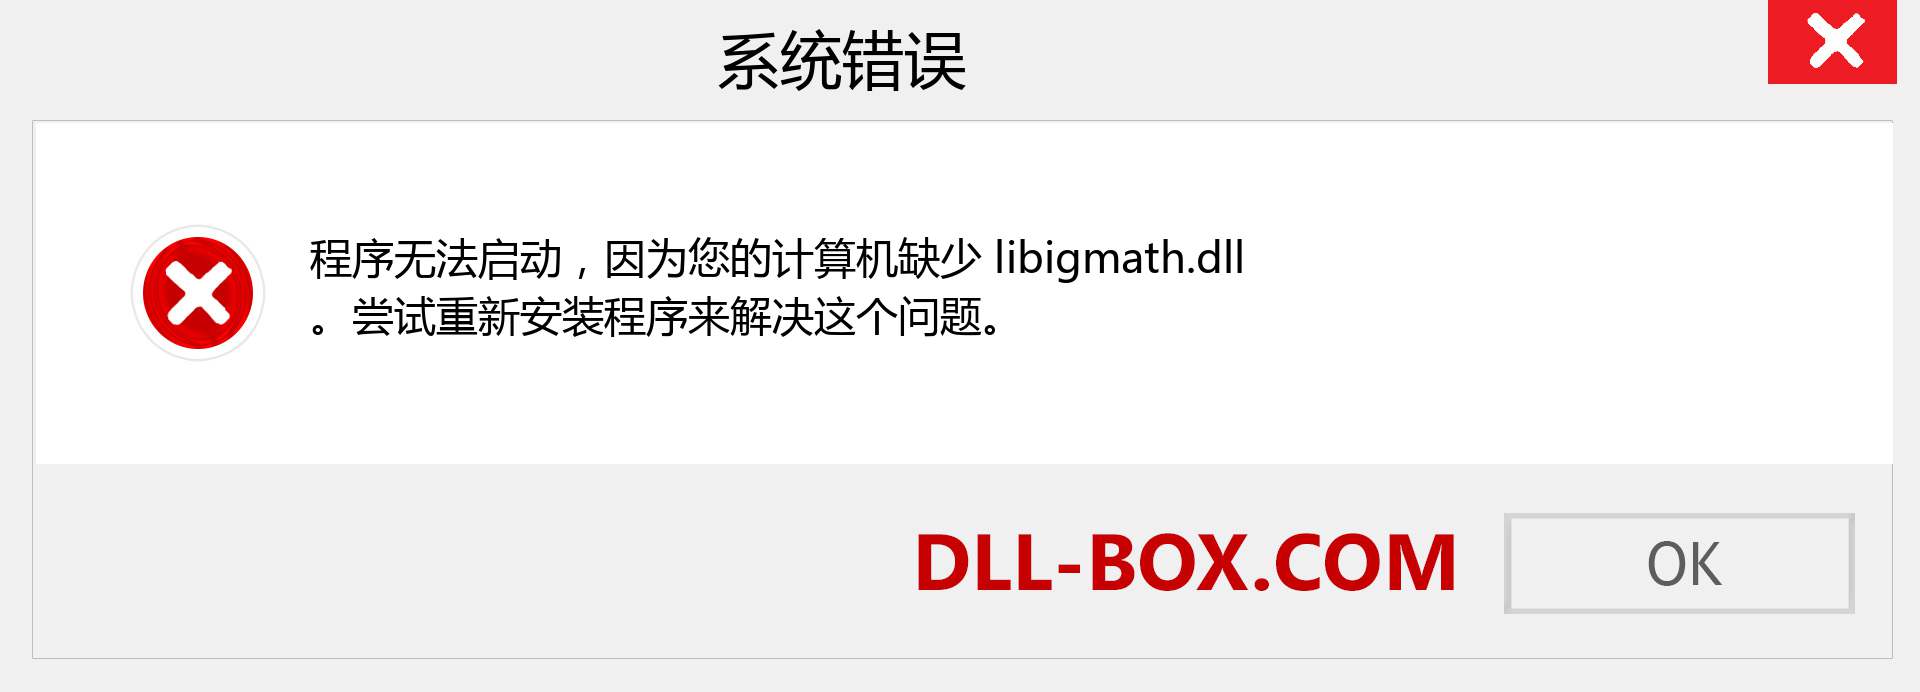 libigmath.dll 文件丢失？。 适用于 Windows 7、8、10 的下载 - 修复 Windows、照片、图像上的 libigmath dll 丢失错误